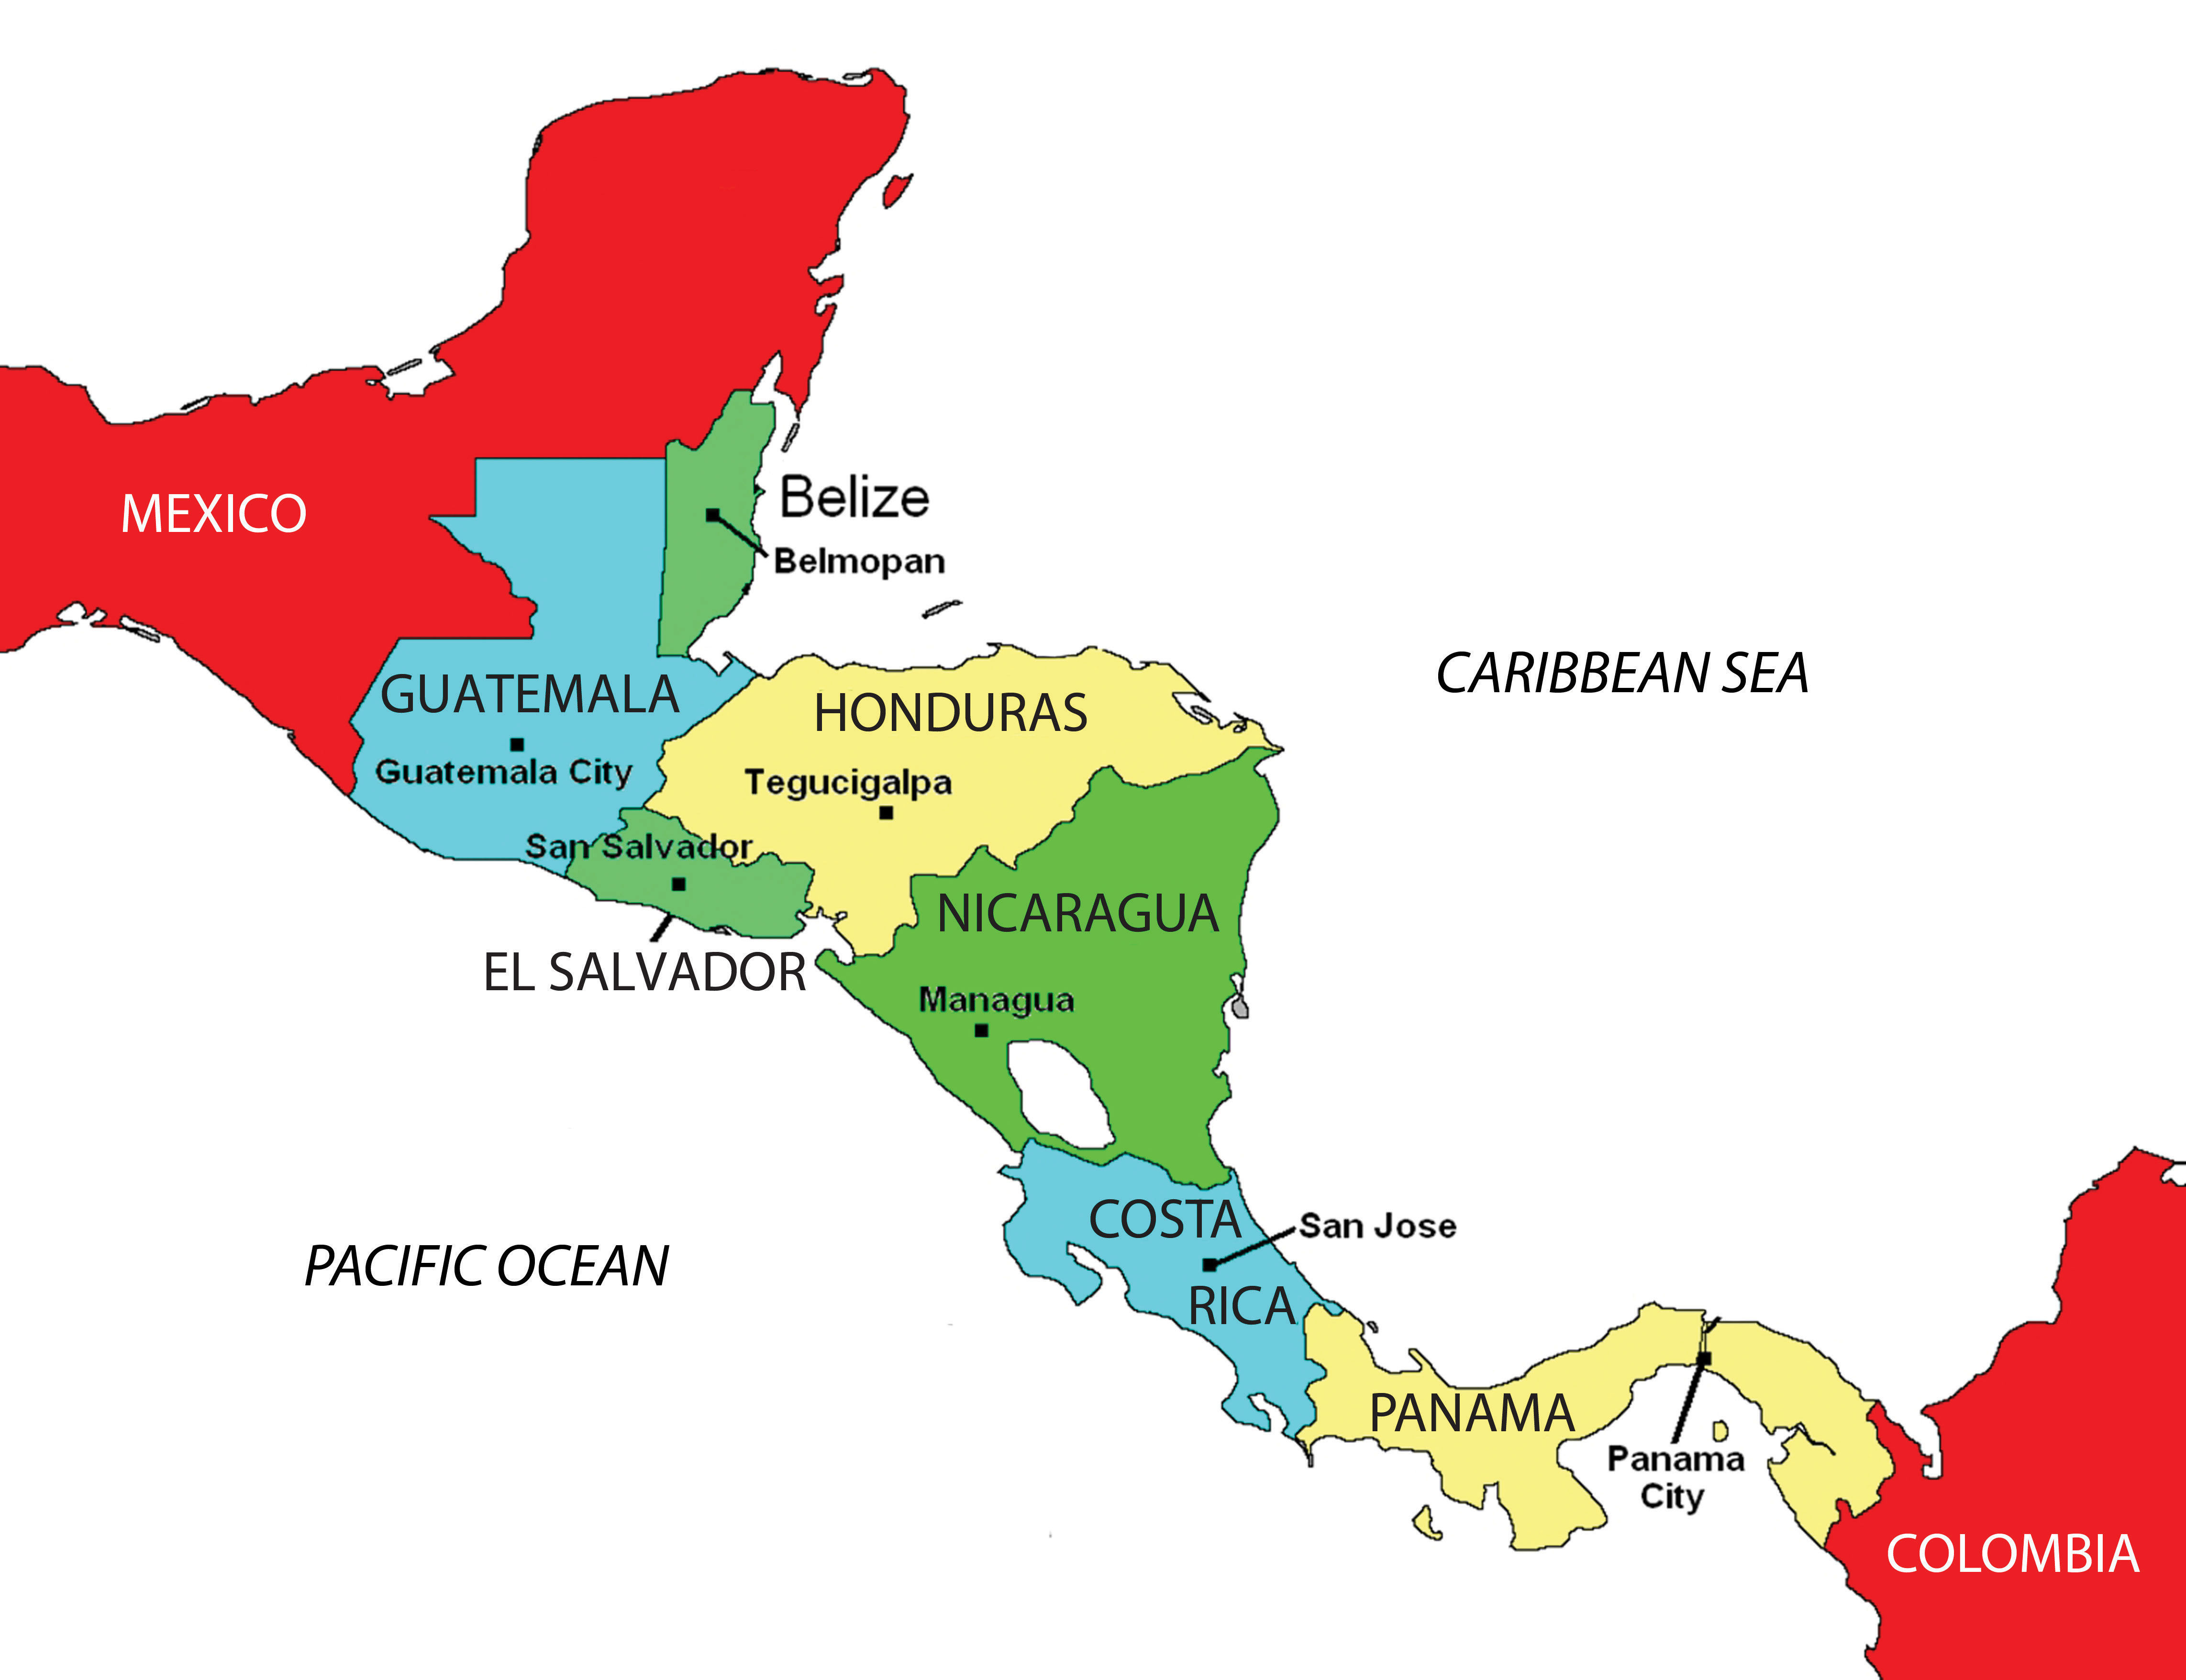 Of the countries of central. Центральная Америка на карте Америки. Карта центральной Америки со странами. Субрегион Центральная Америка.